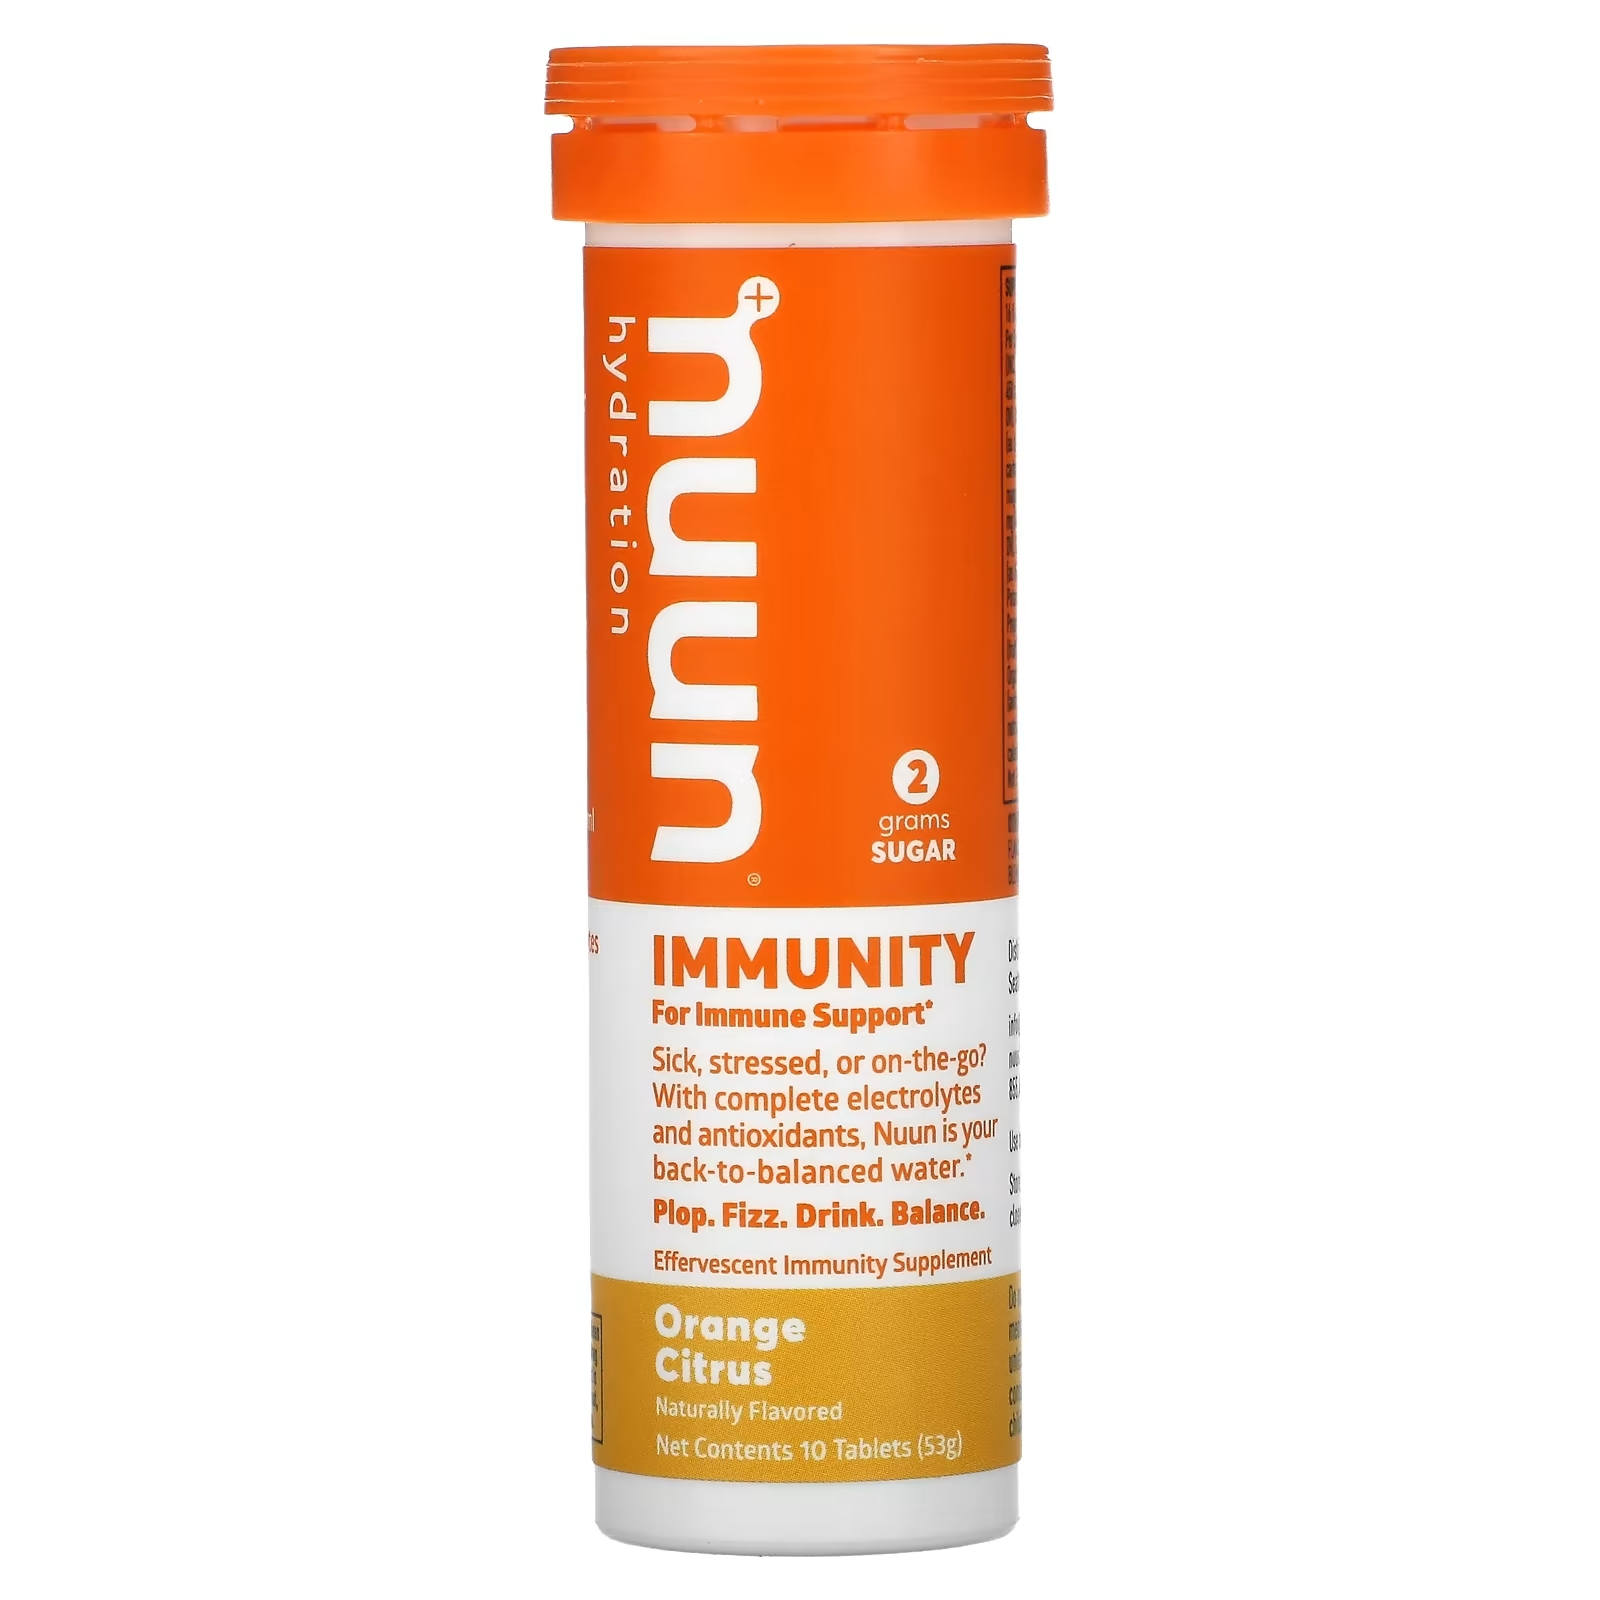 Nuun Hydration Immunity Шипучая добавка для иммунитета апельсин и цитрус, 10 таблеток nuun hydration sport добавка с шипучими электролитами апельсин 10 таблеток